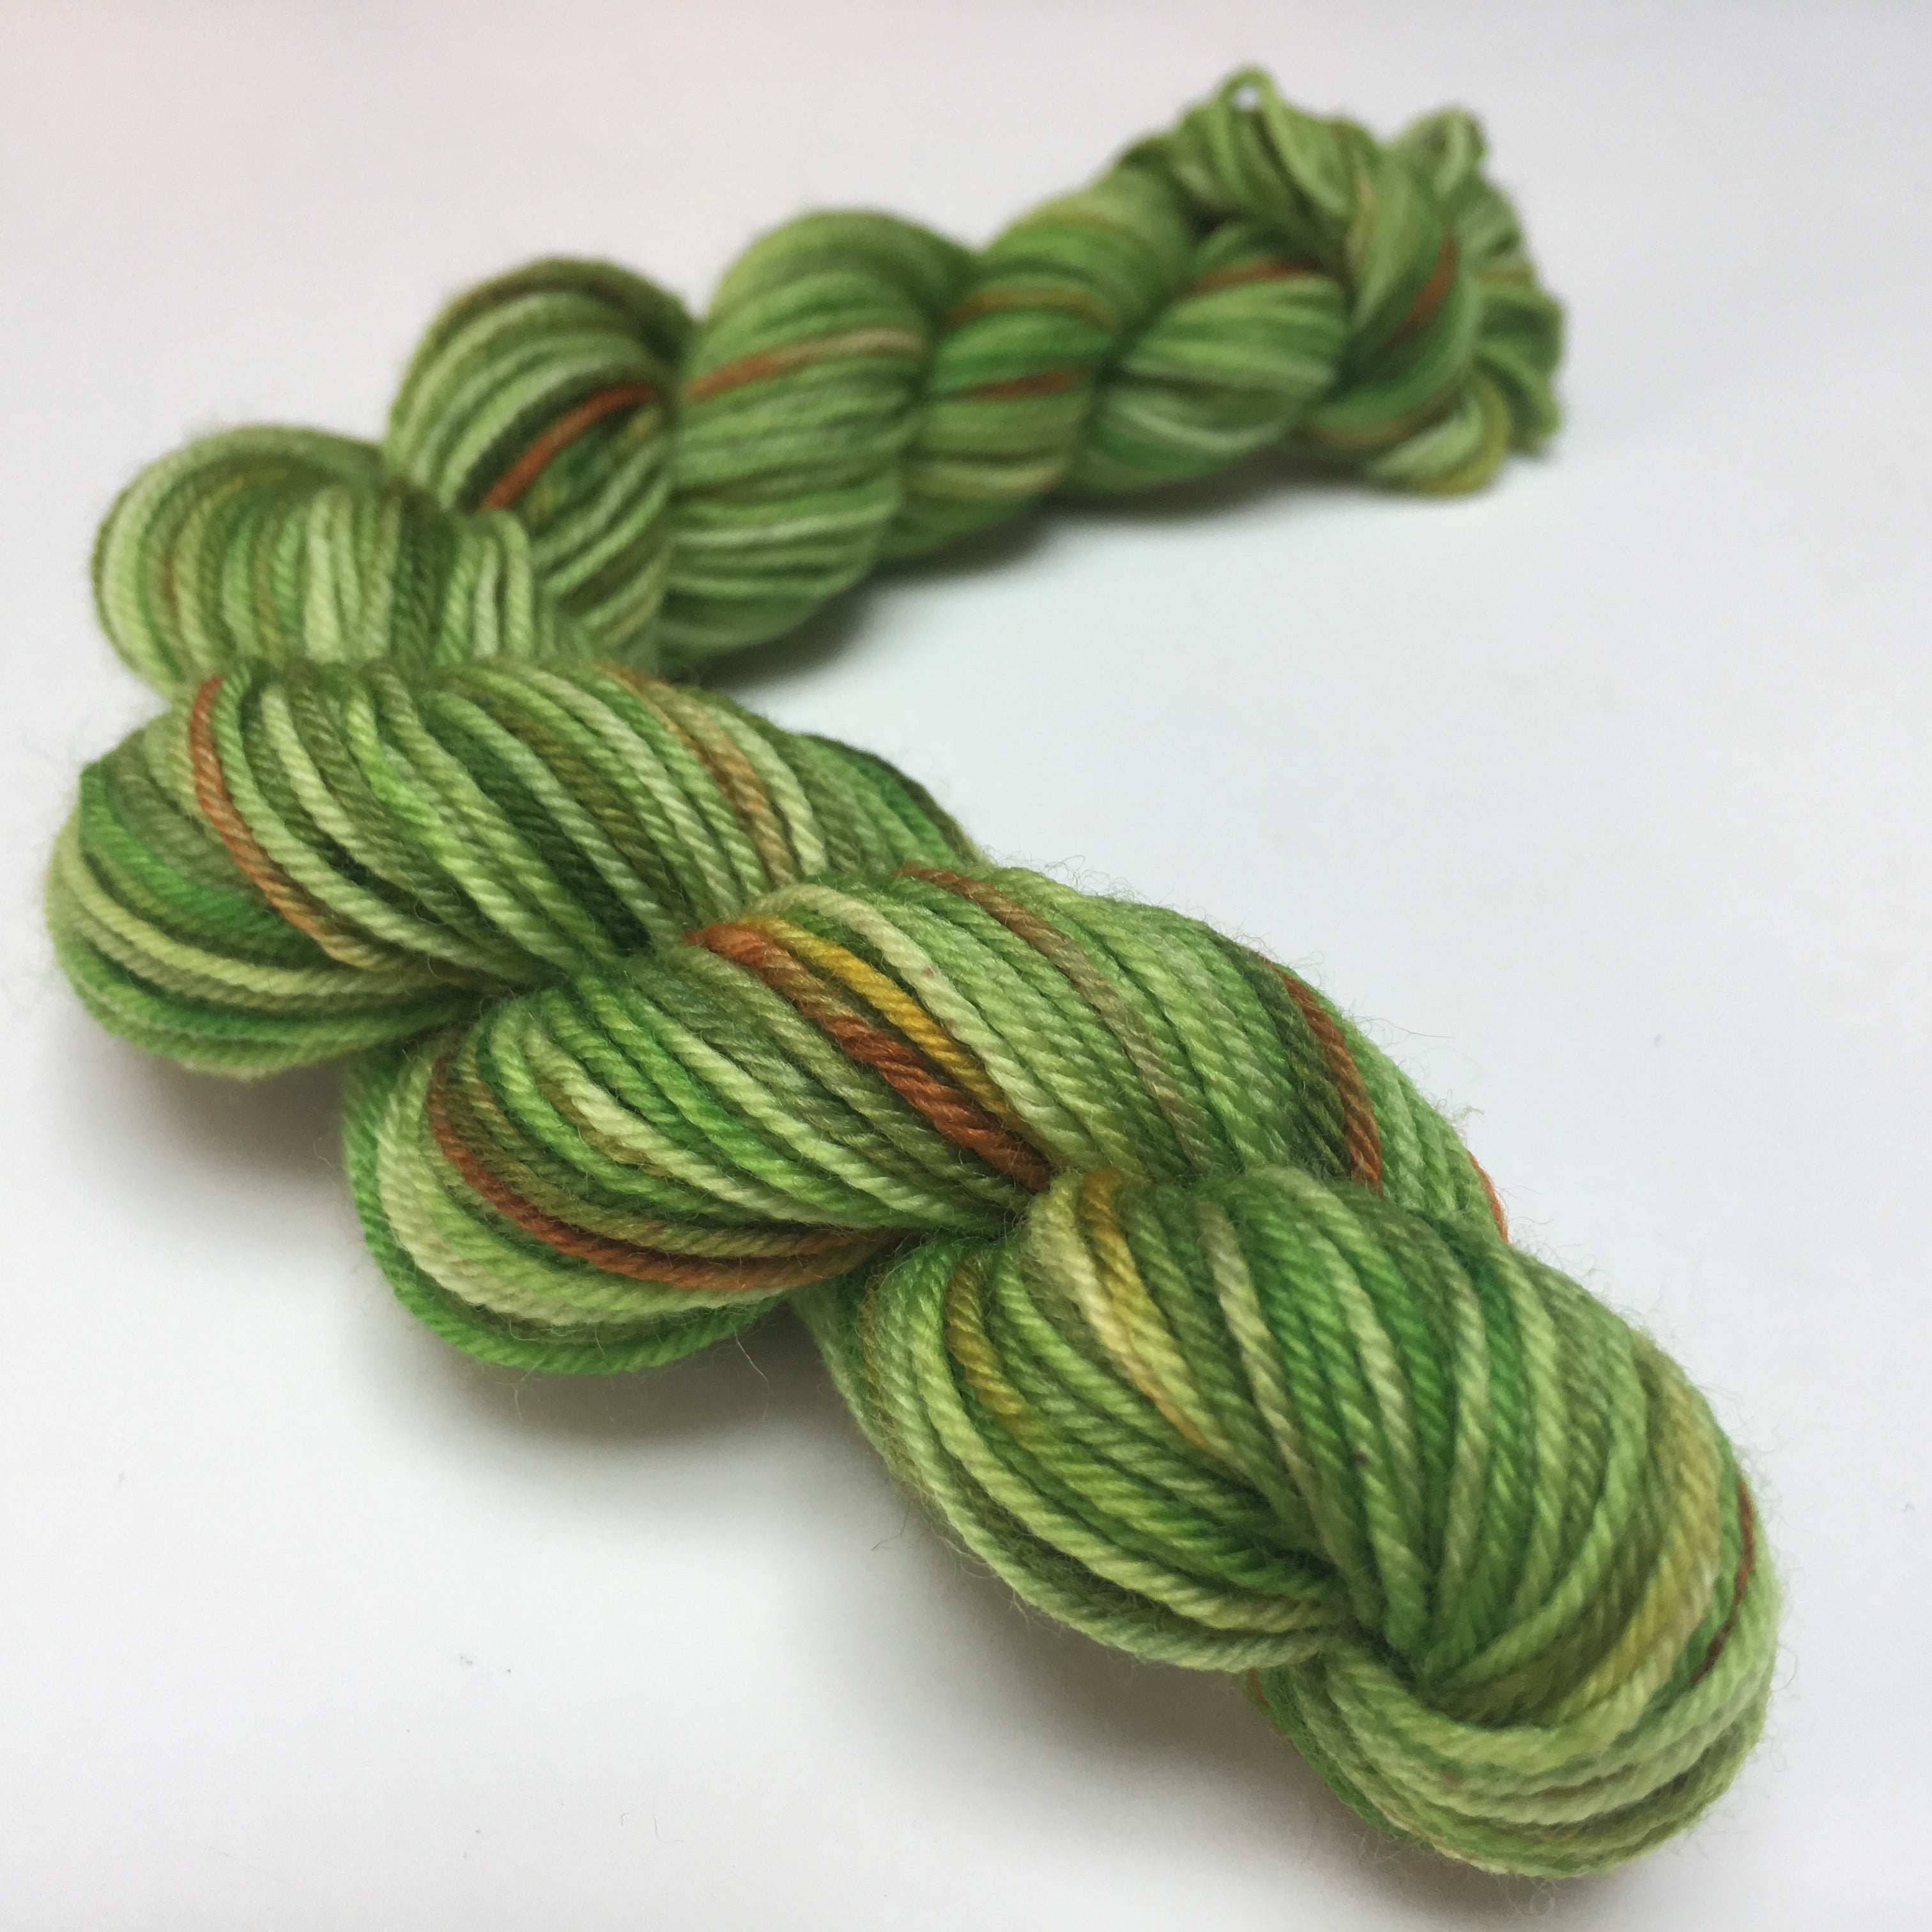 20g mini skin in tonal green for knitting socks and blankets